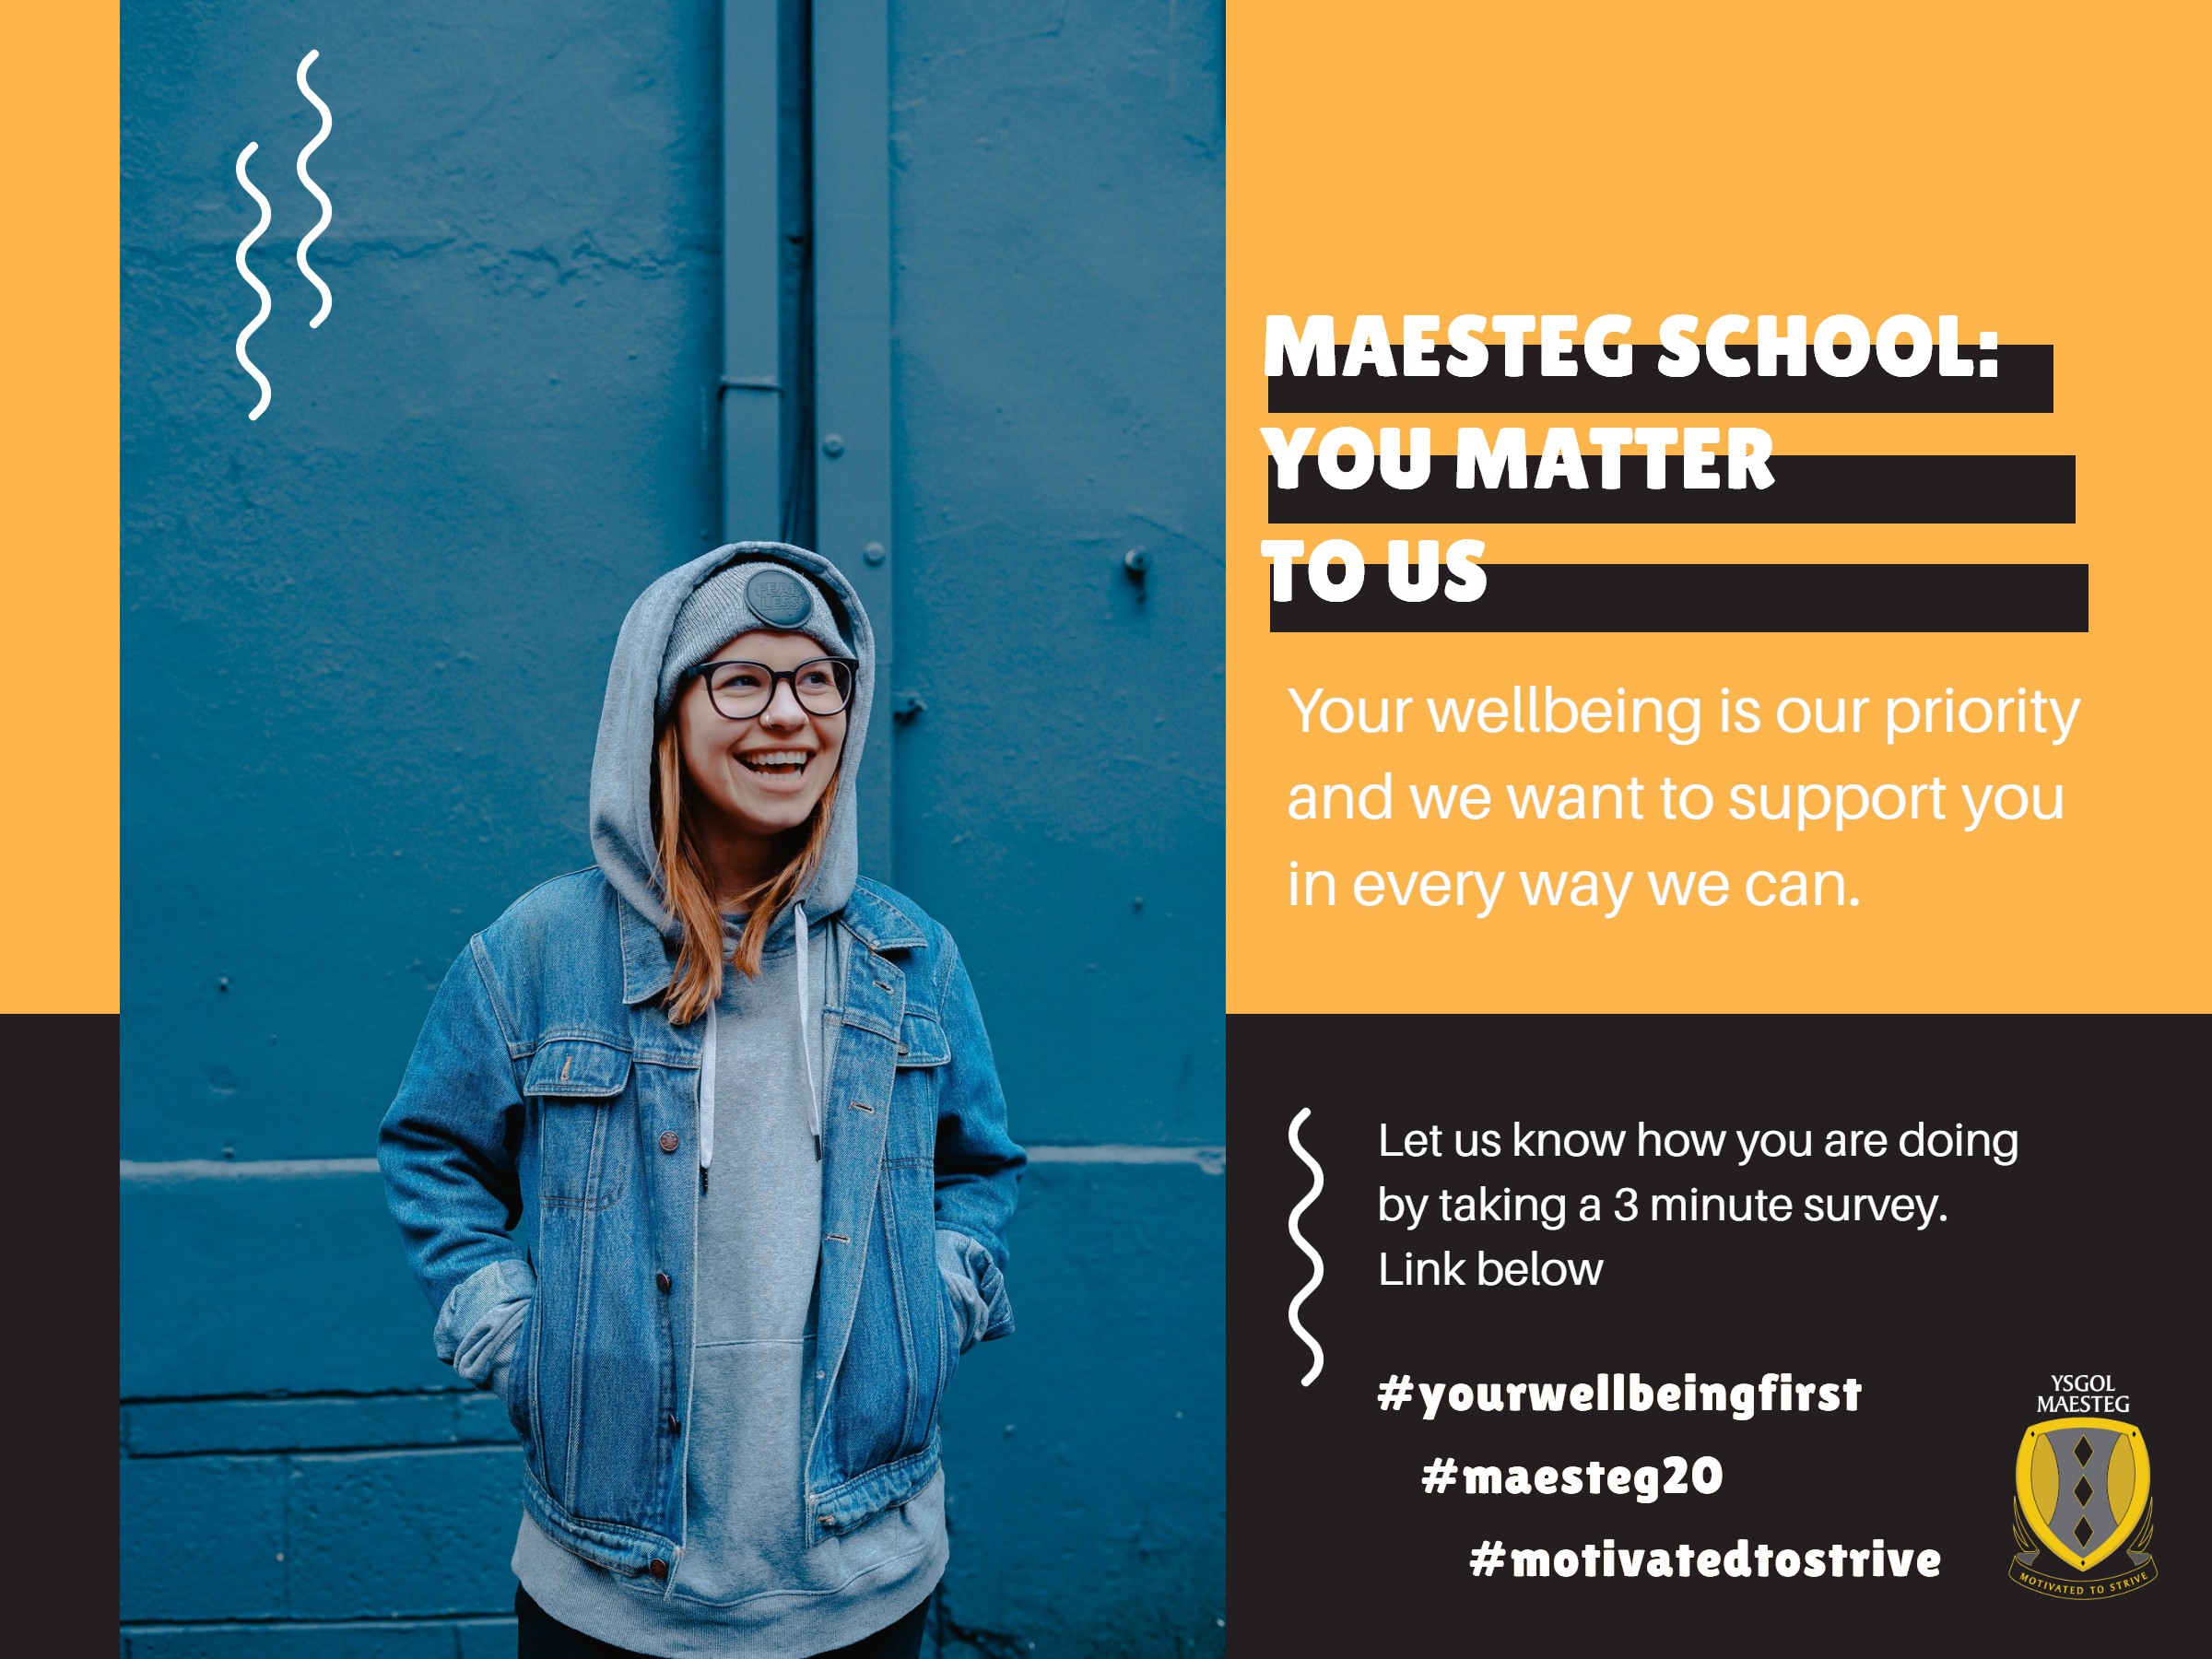 Maesteg School: You Matter To Us